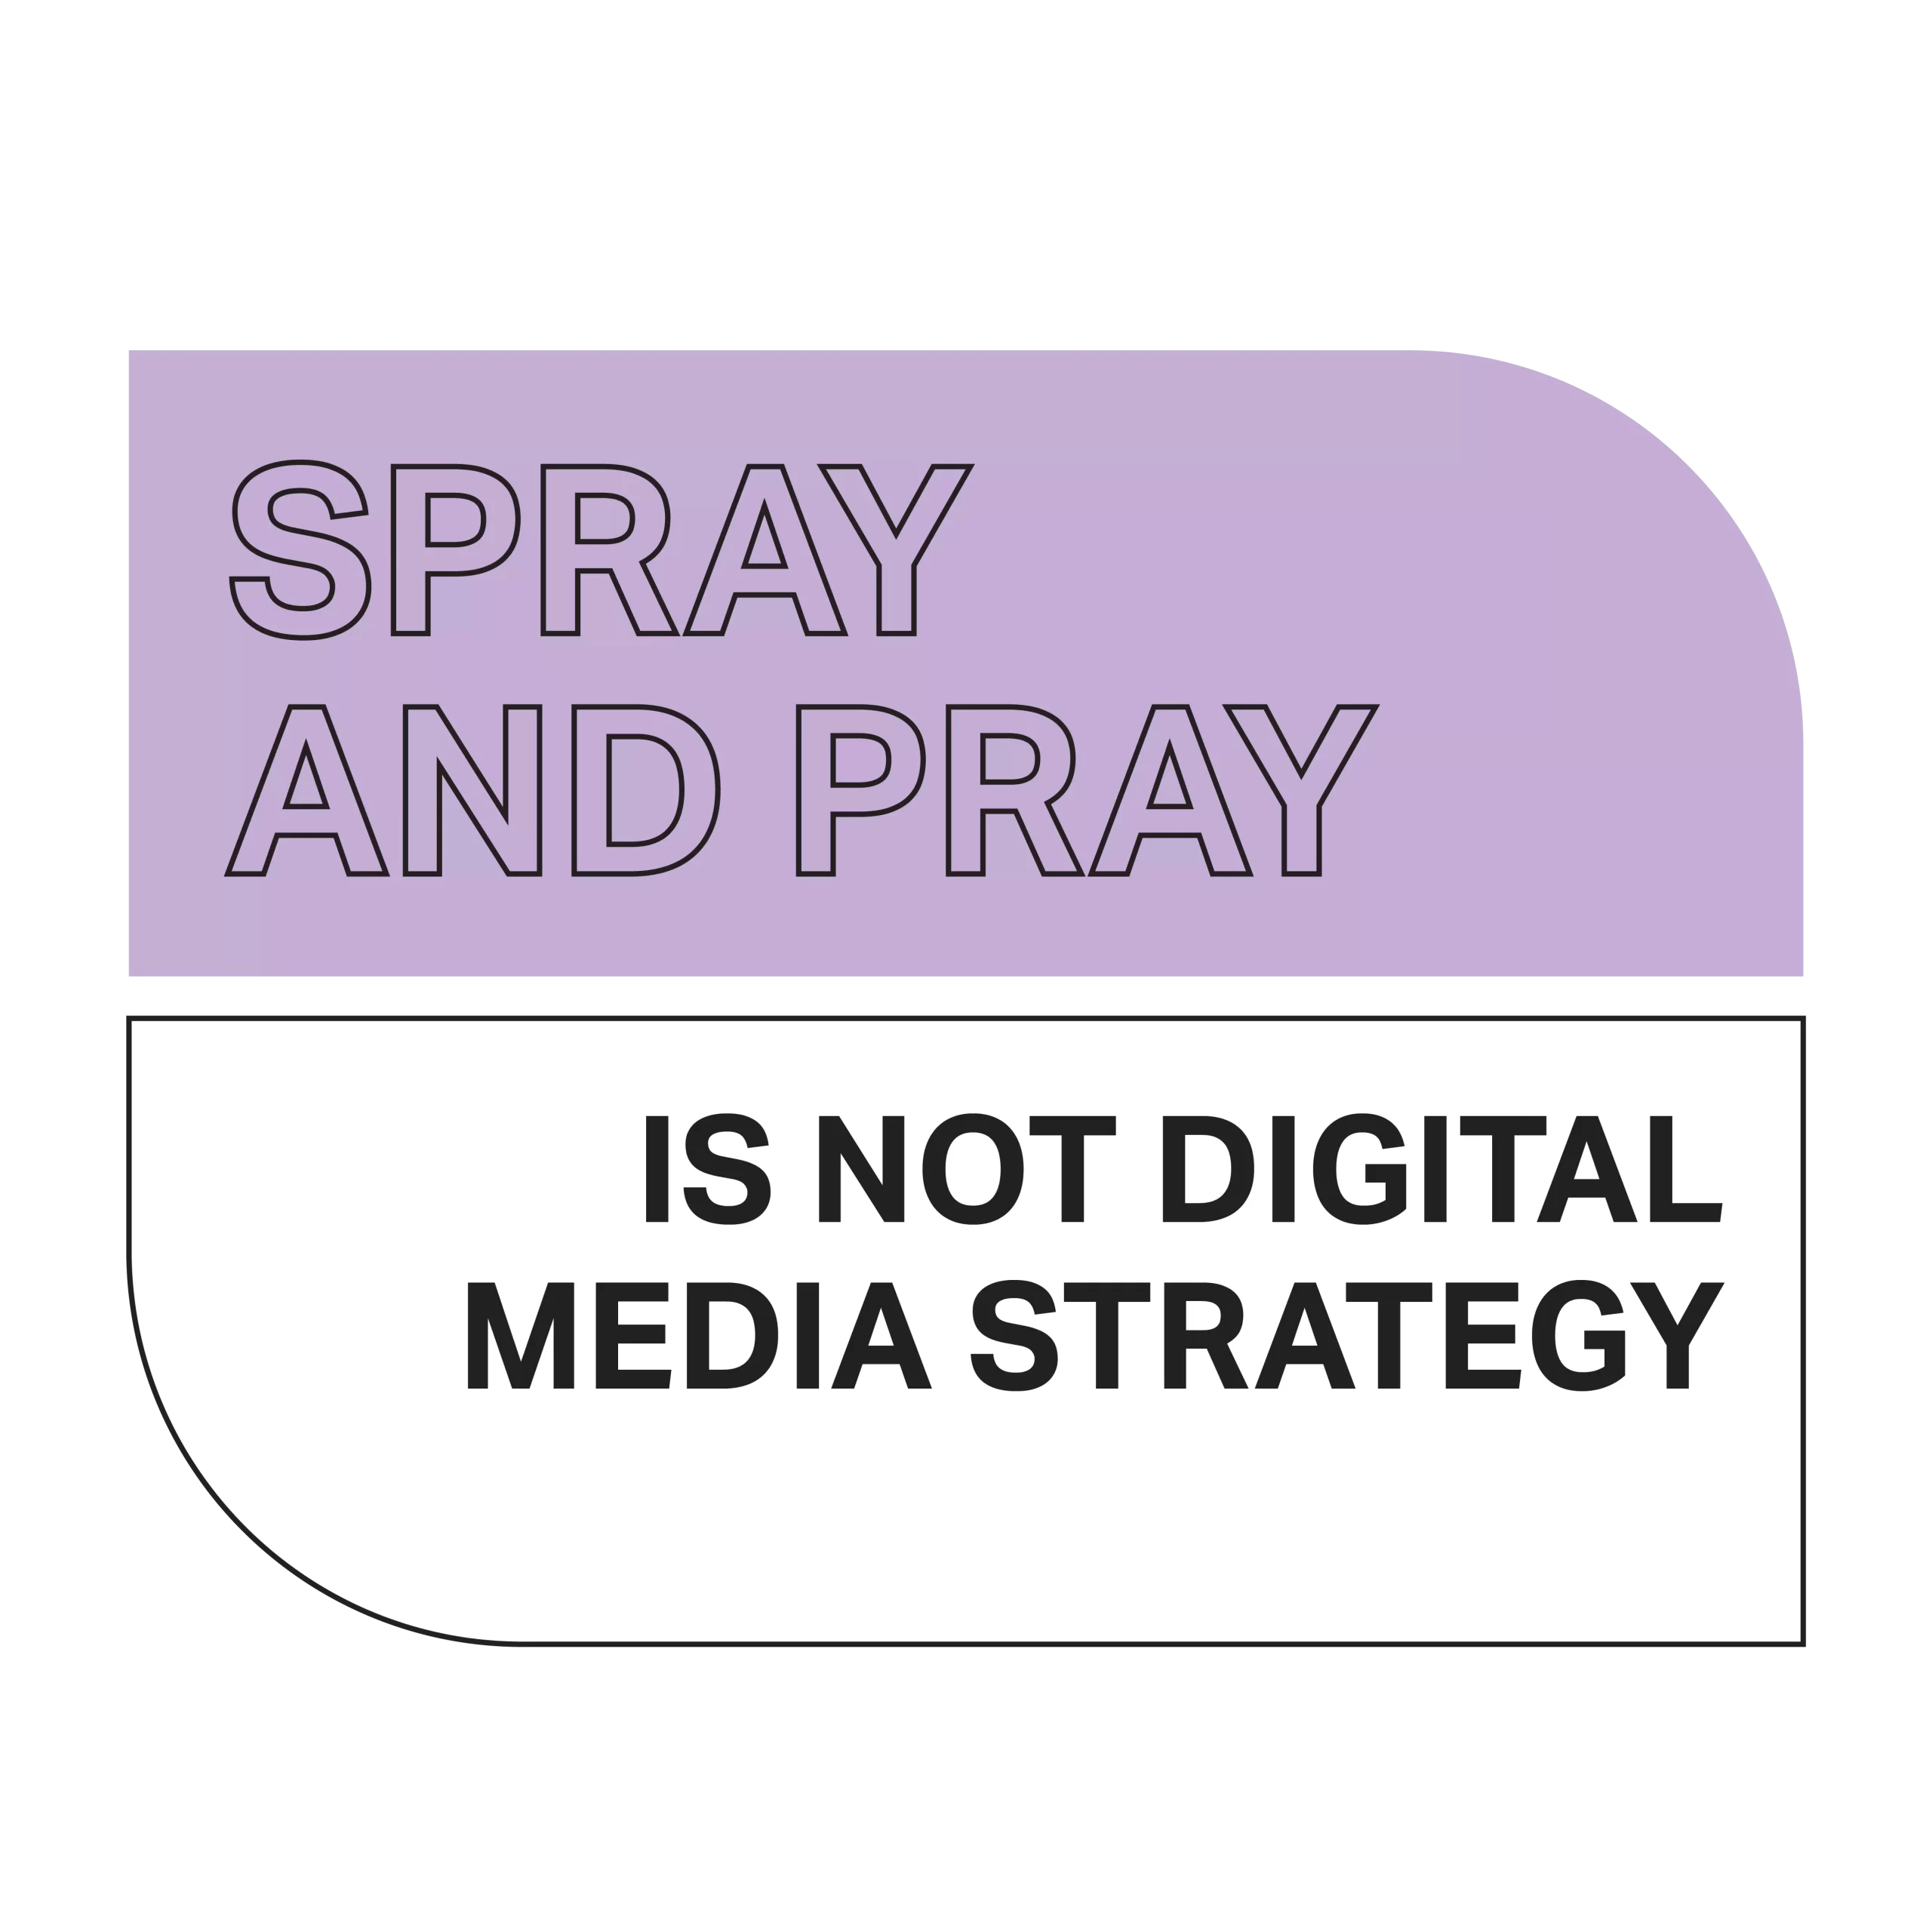 Spray and pray is not a digital media strategy